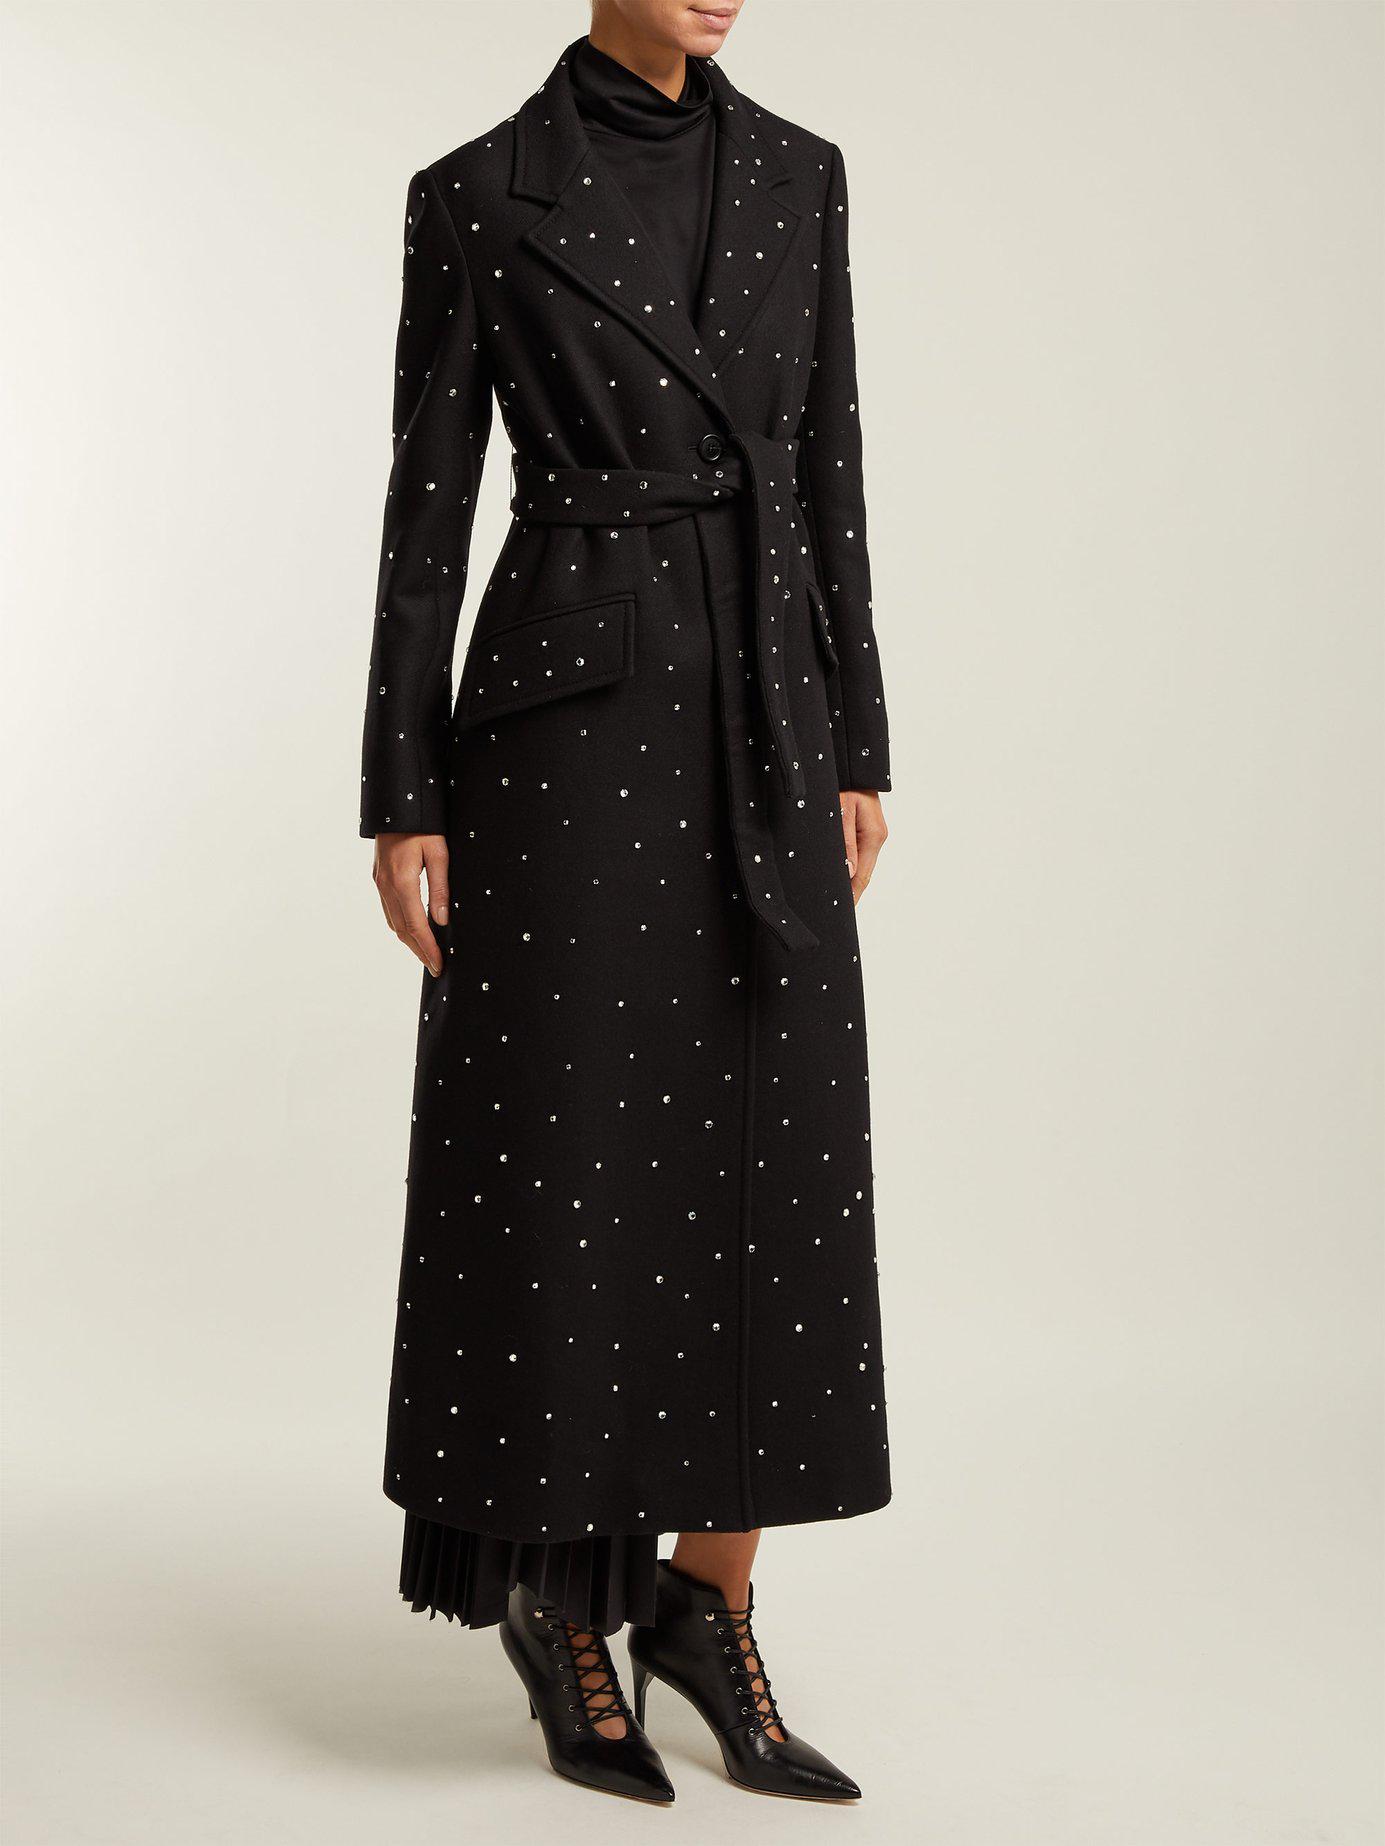 Miu Miu Crystal Embellished Single Breasted Wool Coat in Black | Lyst